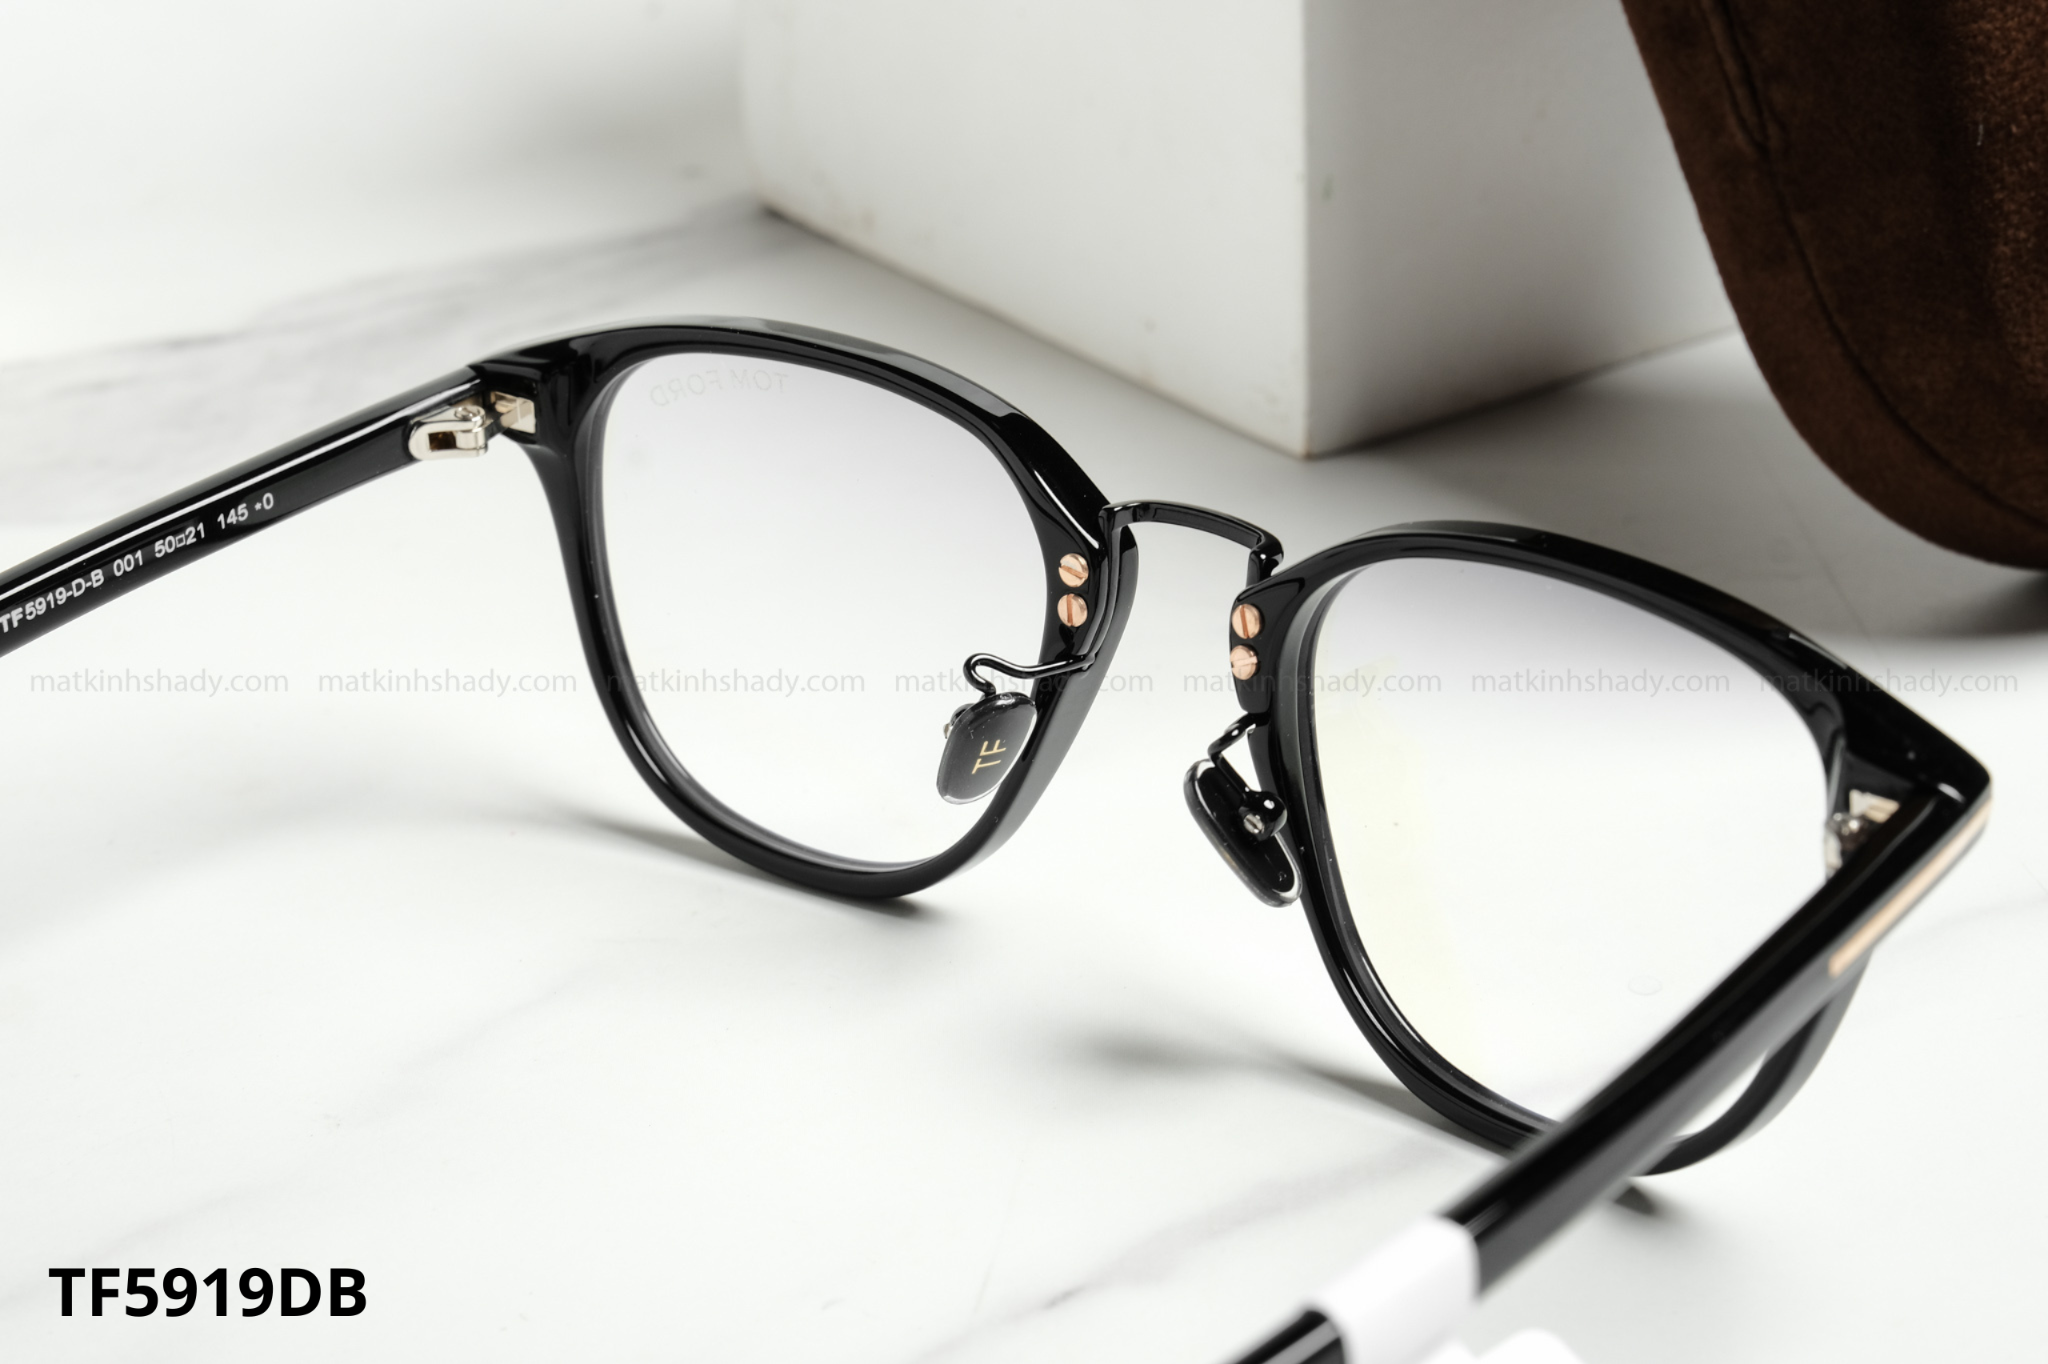  Tom Ford Eyewear - Glasses - TF5919DB 